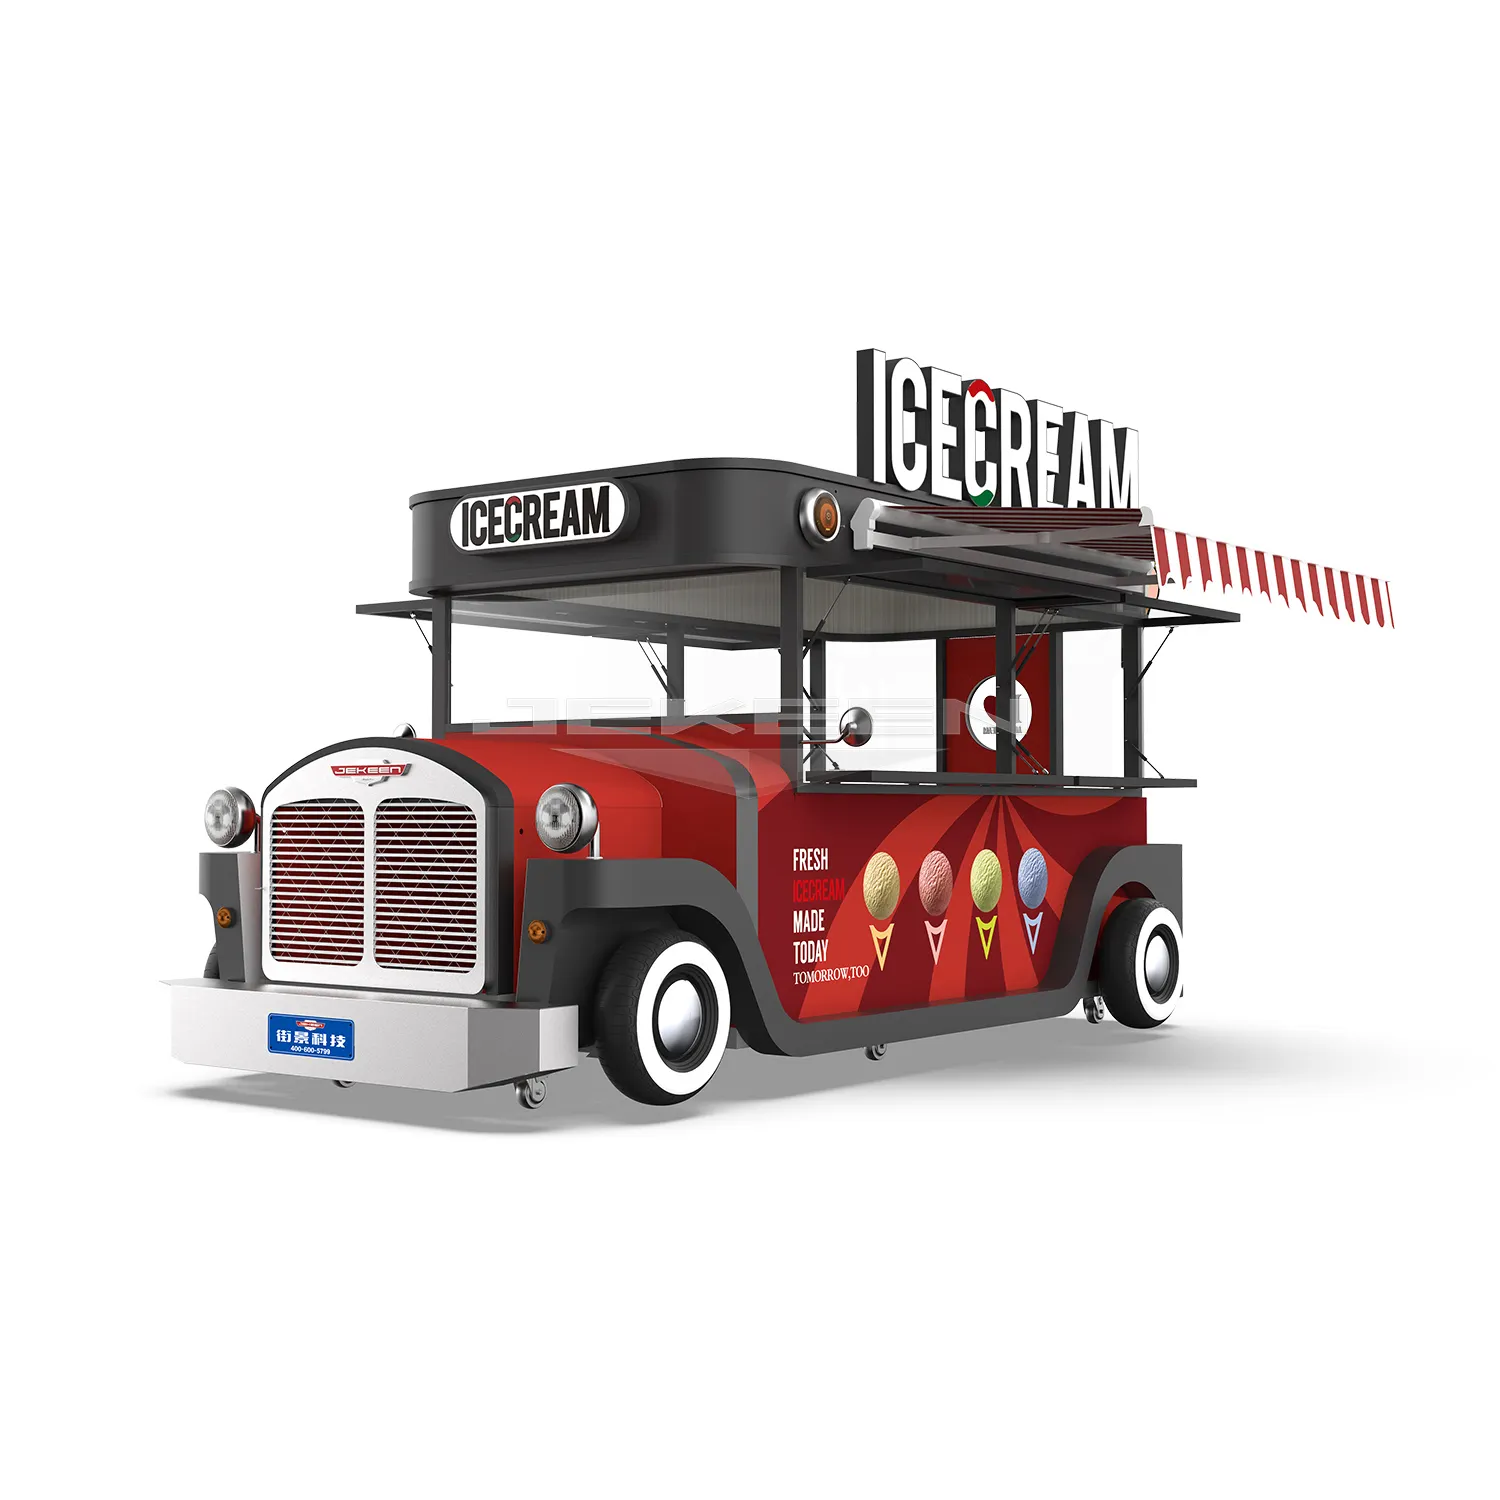 JEKEEN Fast-Food-LKW-Anhänger Mobile Hot Dog Burger Tragbares Eis Push Gebrauchte Lebensmittel wagen Street Vending Carts Zum Verkauf